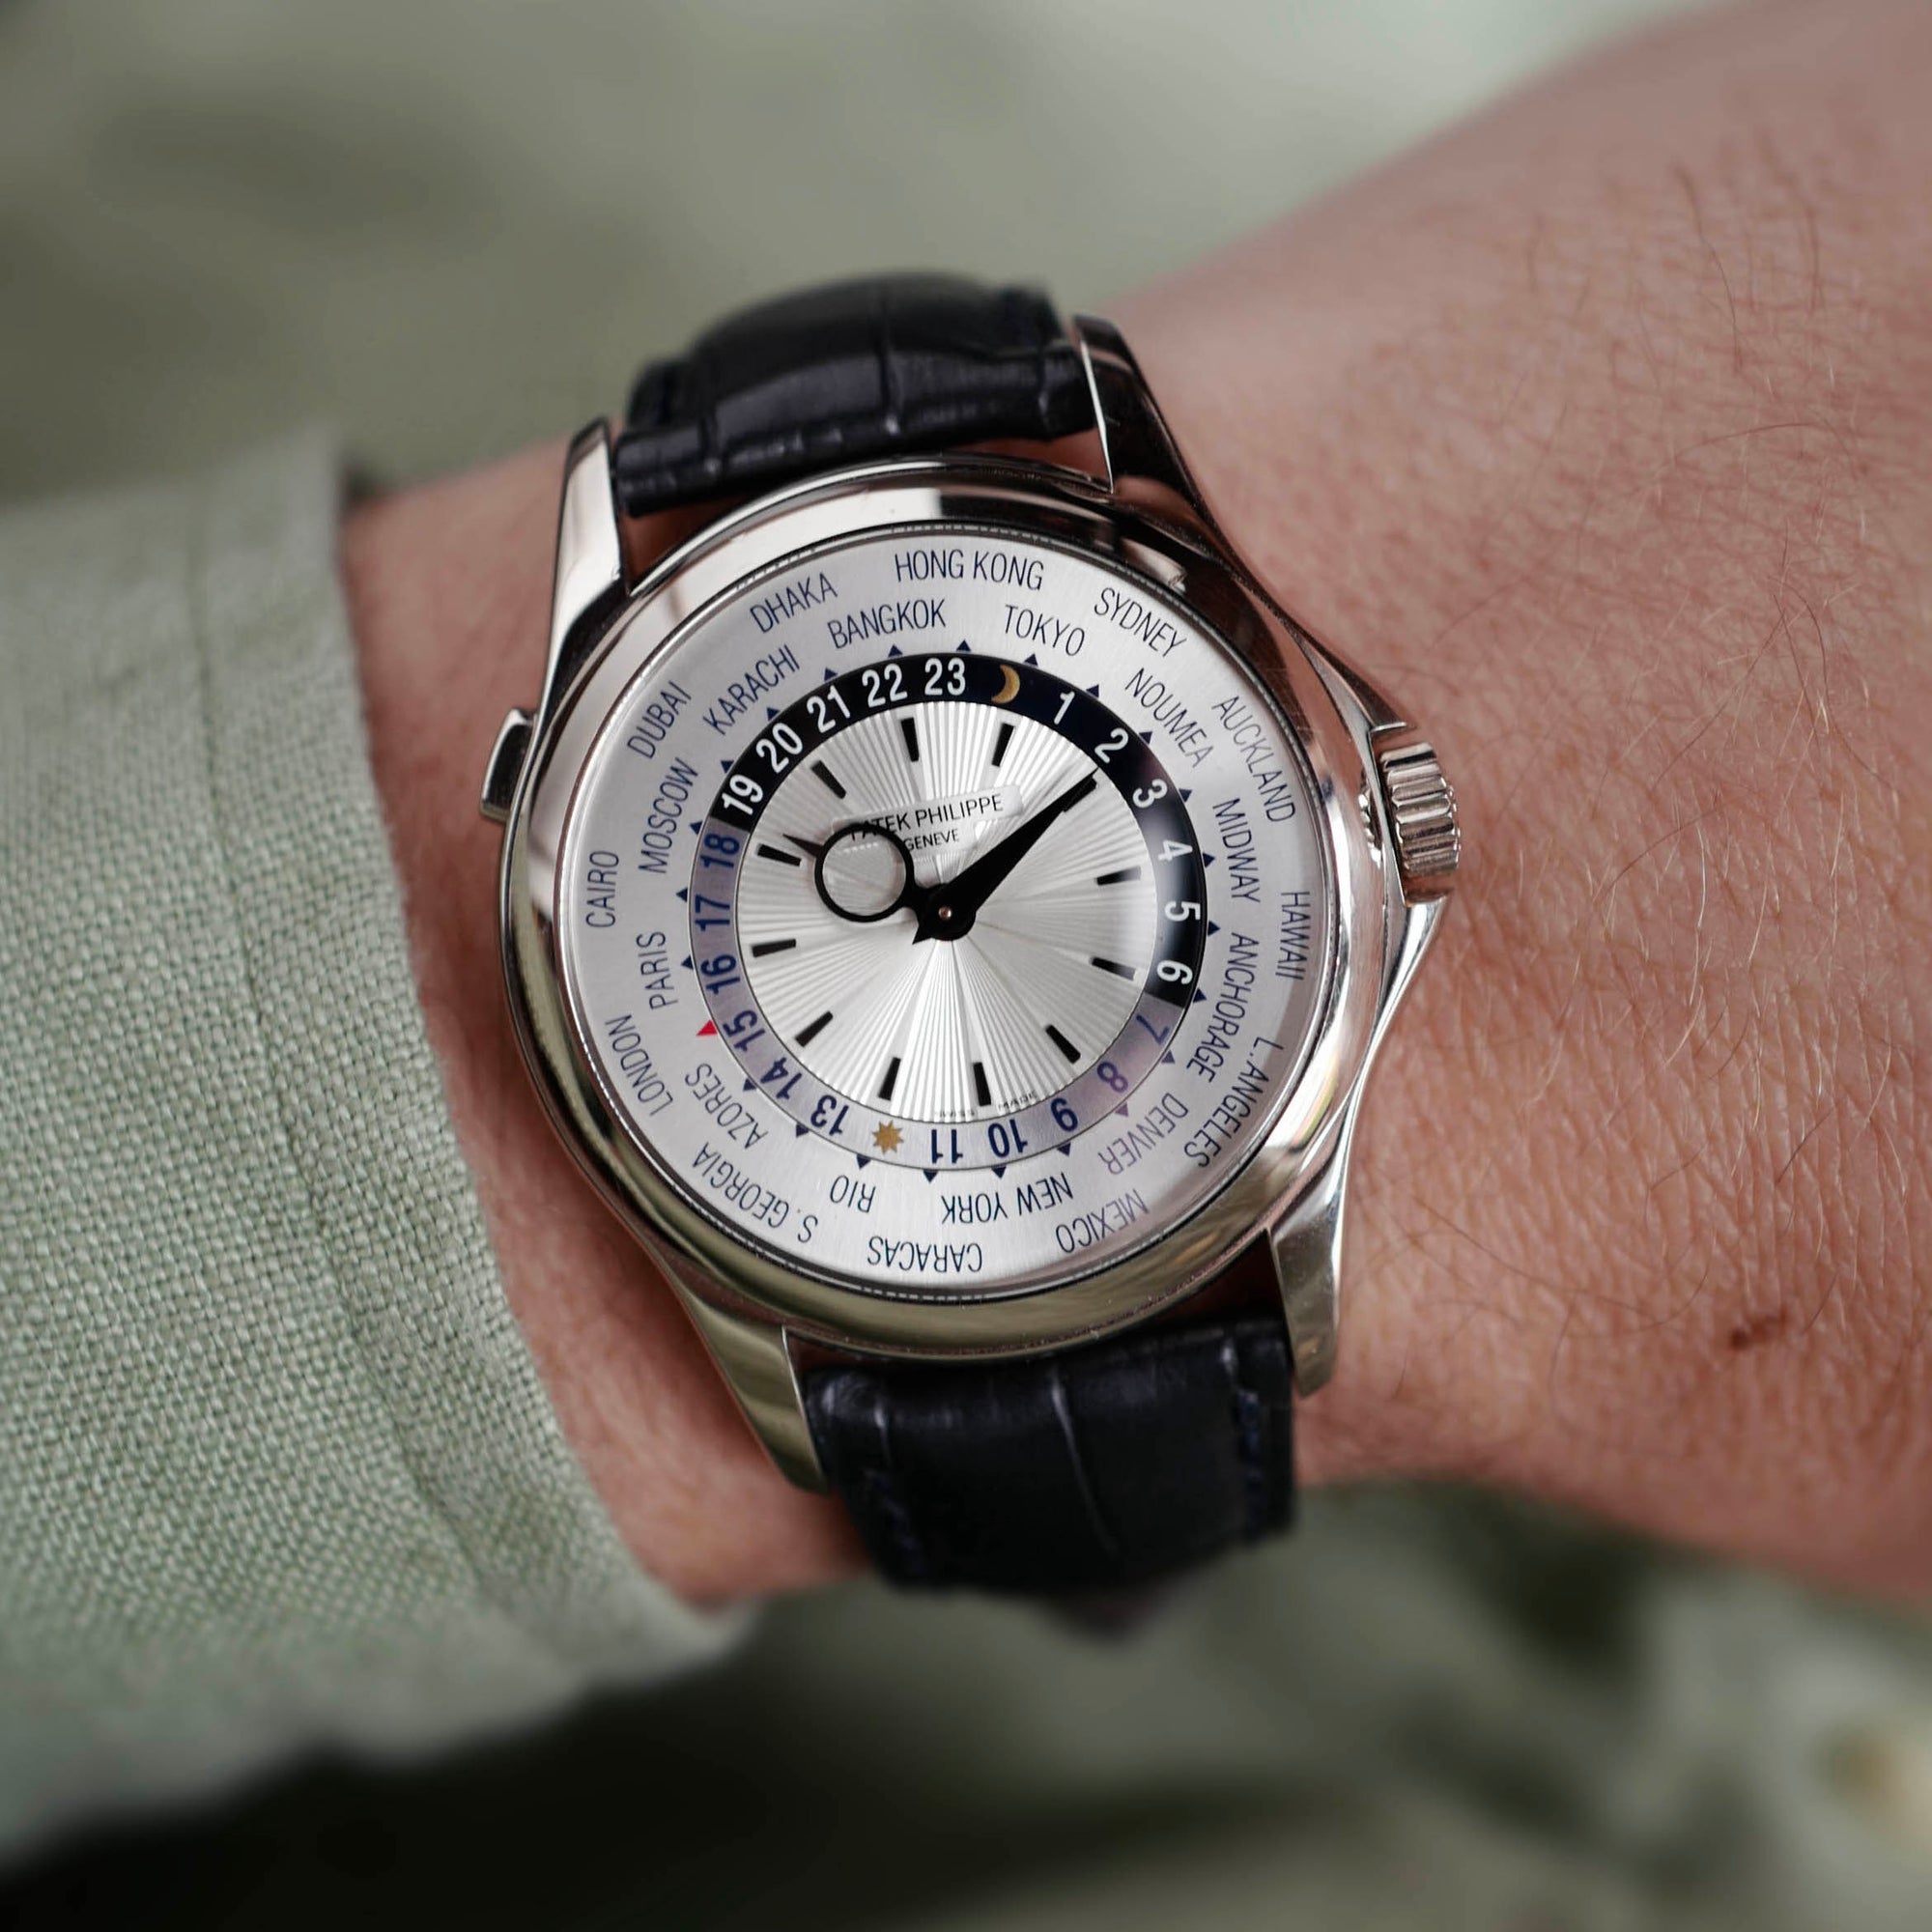 Patek Philippe - Patek Philippe White Gold World Time Watch Ref. 5130 - The Keystone Watches